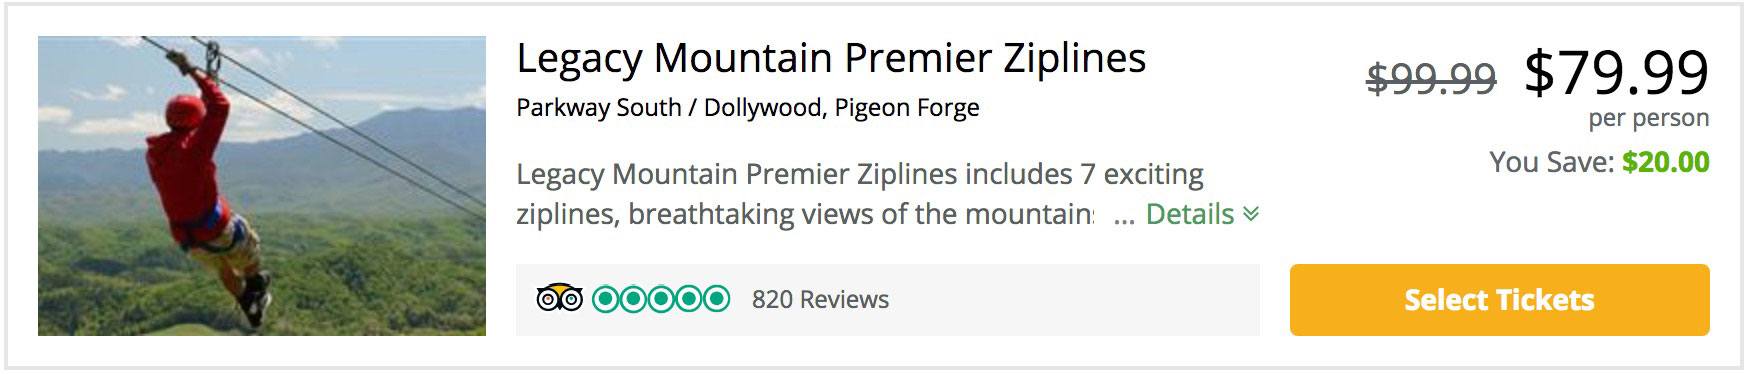 legacy mountain zipline coupon